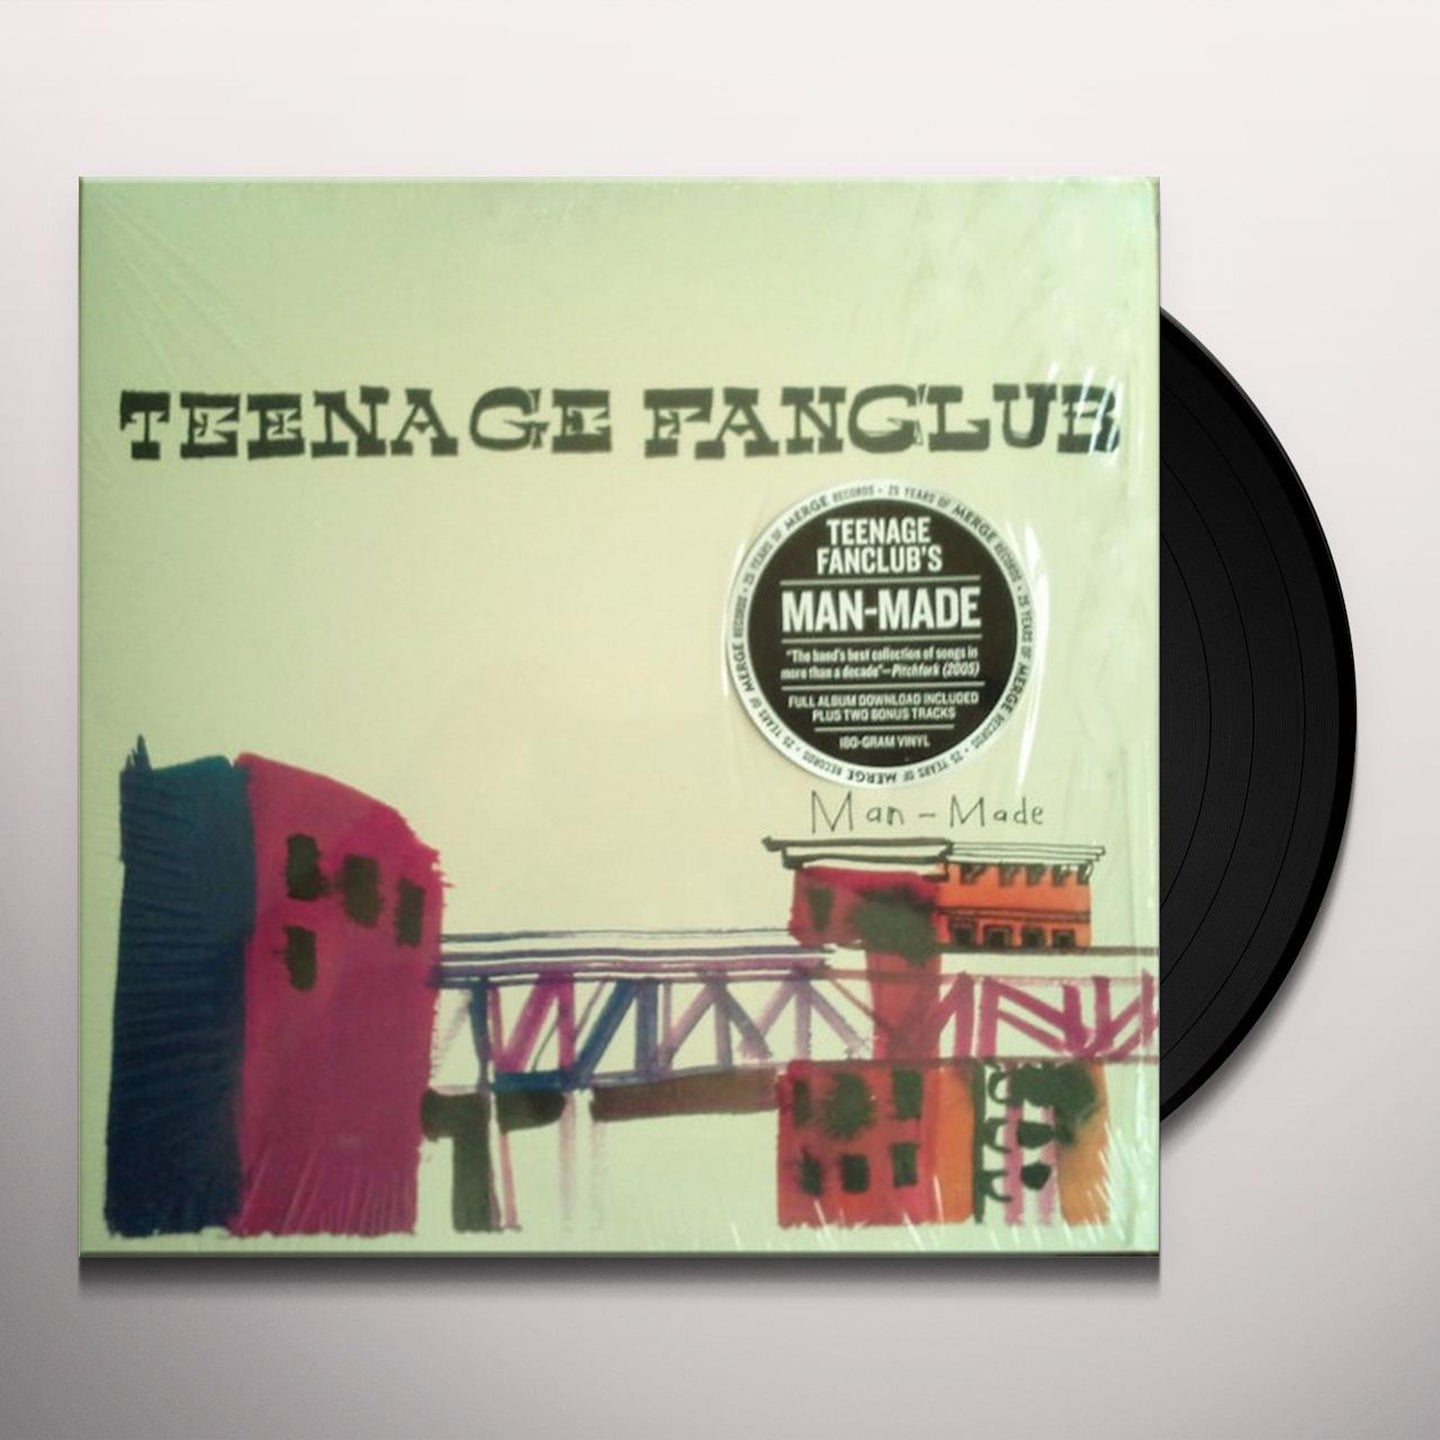 Teenage Fanclub - Manmade